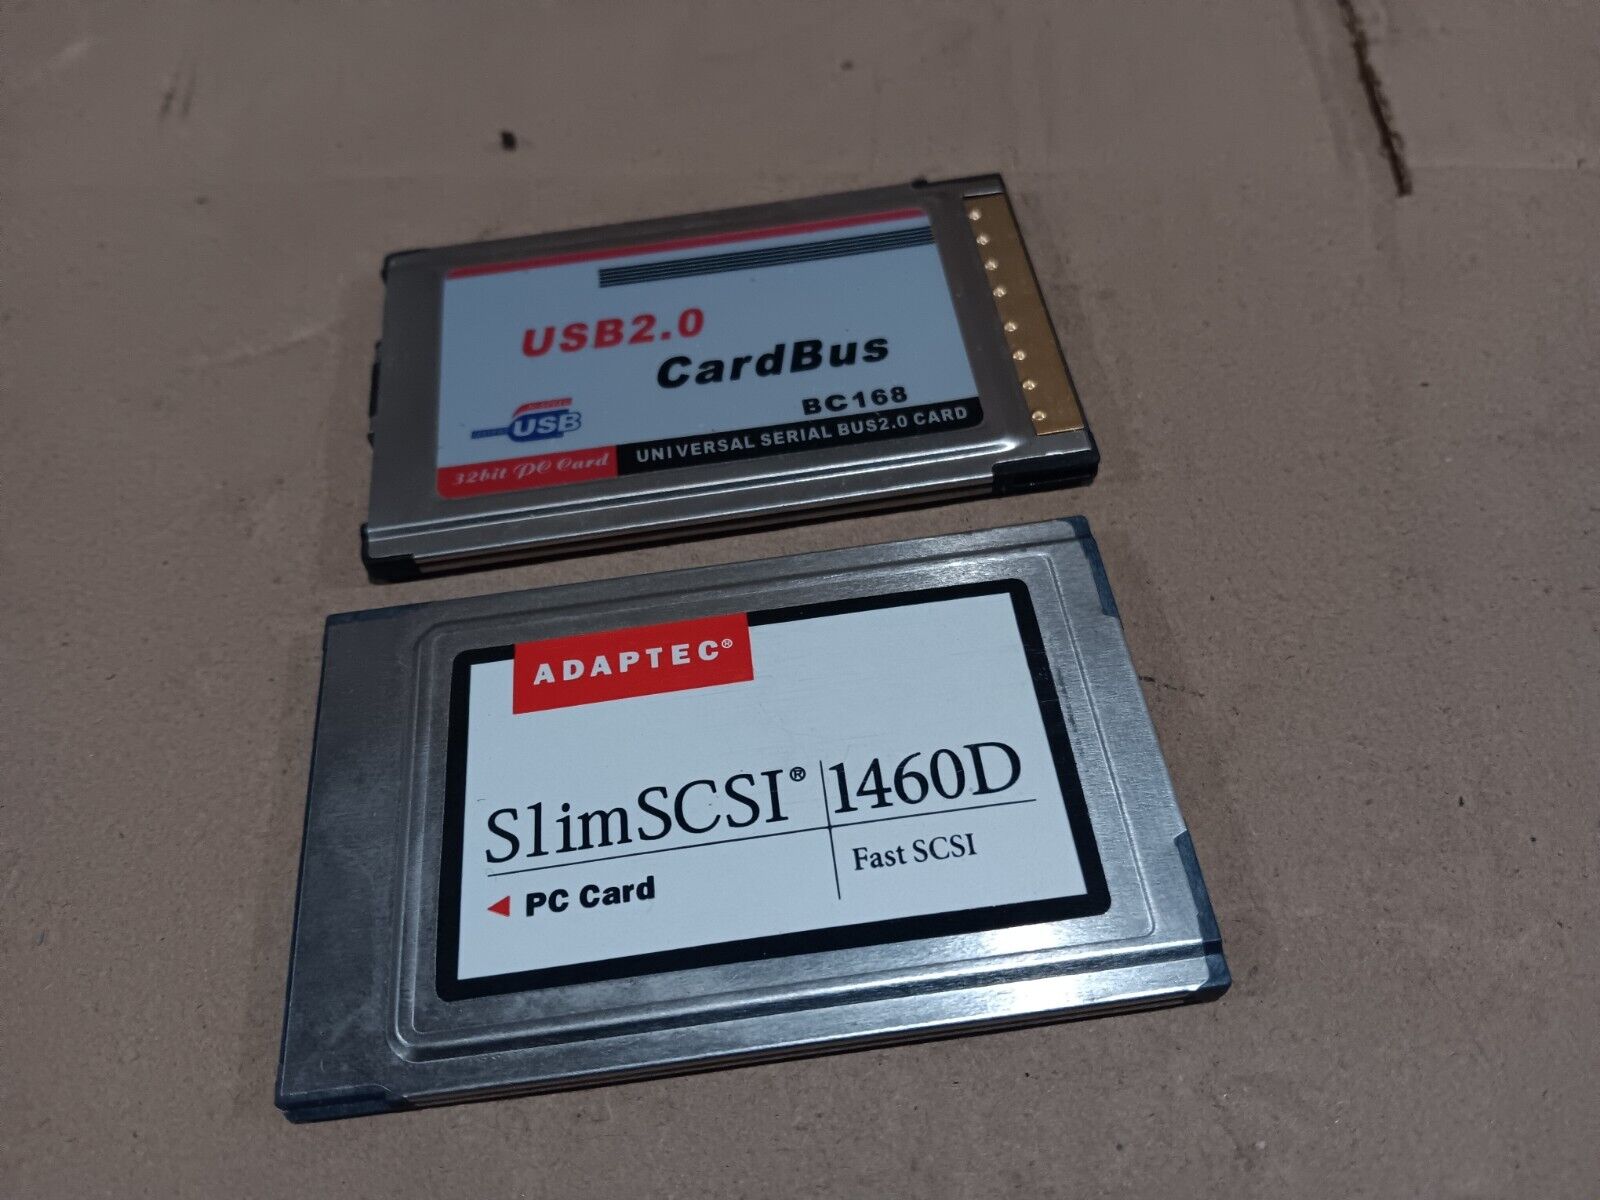 Lot of 2 Adaptec SlimSCSI 1460D Fast SCSI PC Card PCMCIA & USB2.0 CardBus  BC168